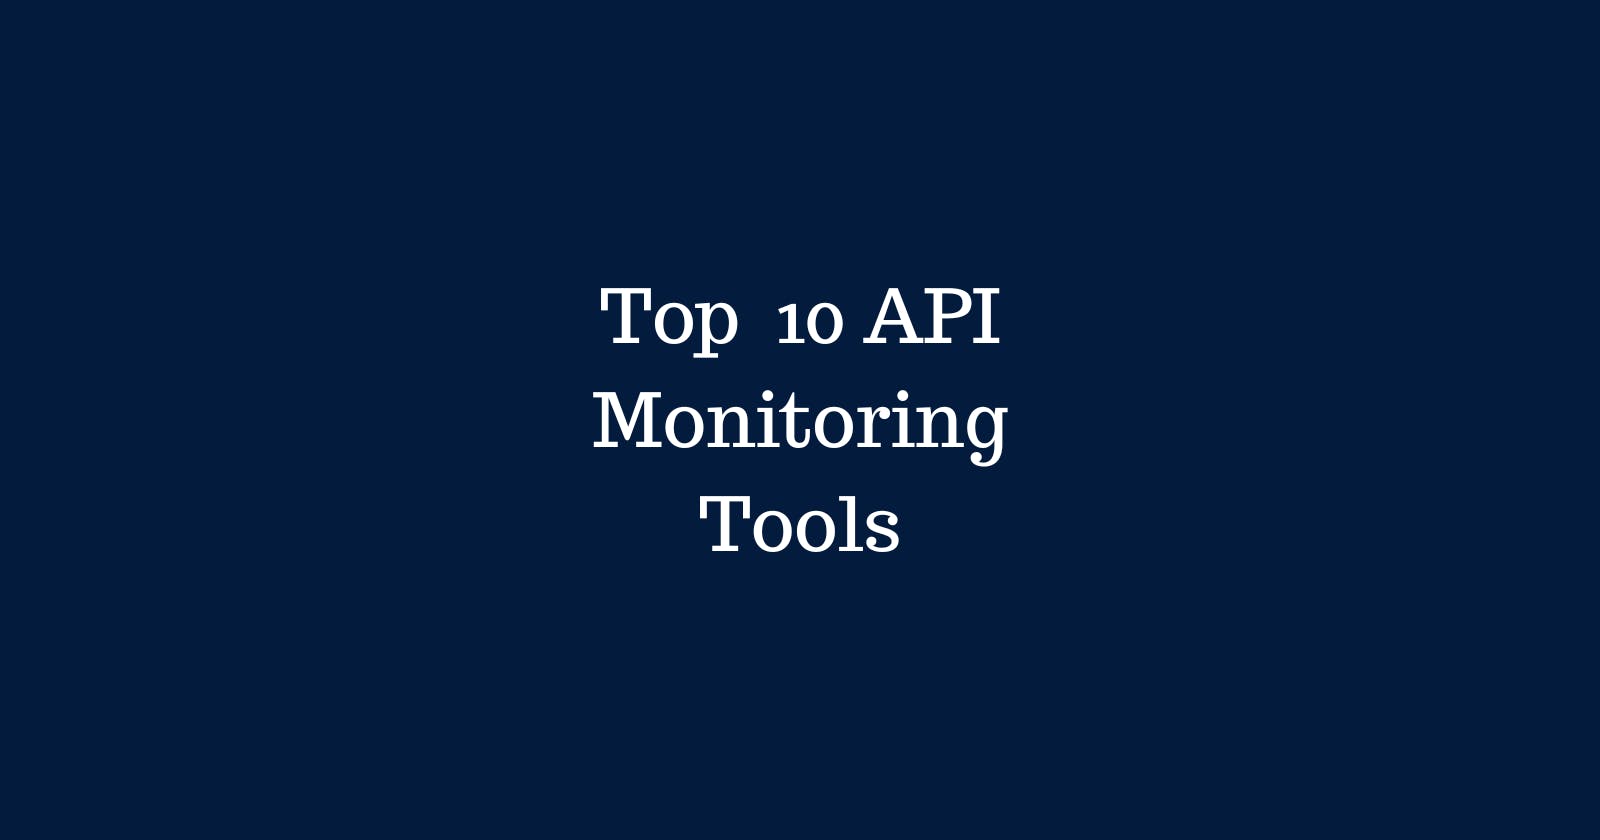 Top 10 API Monitoring Tools